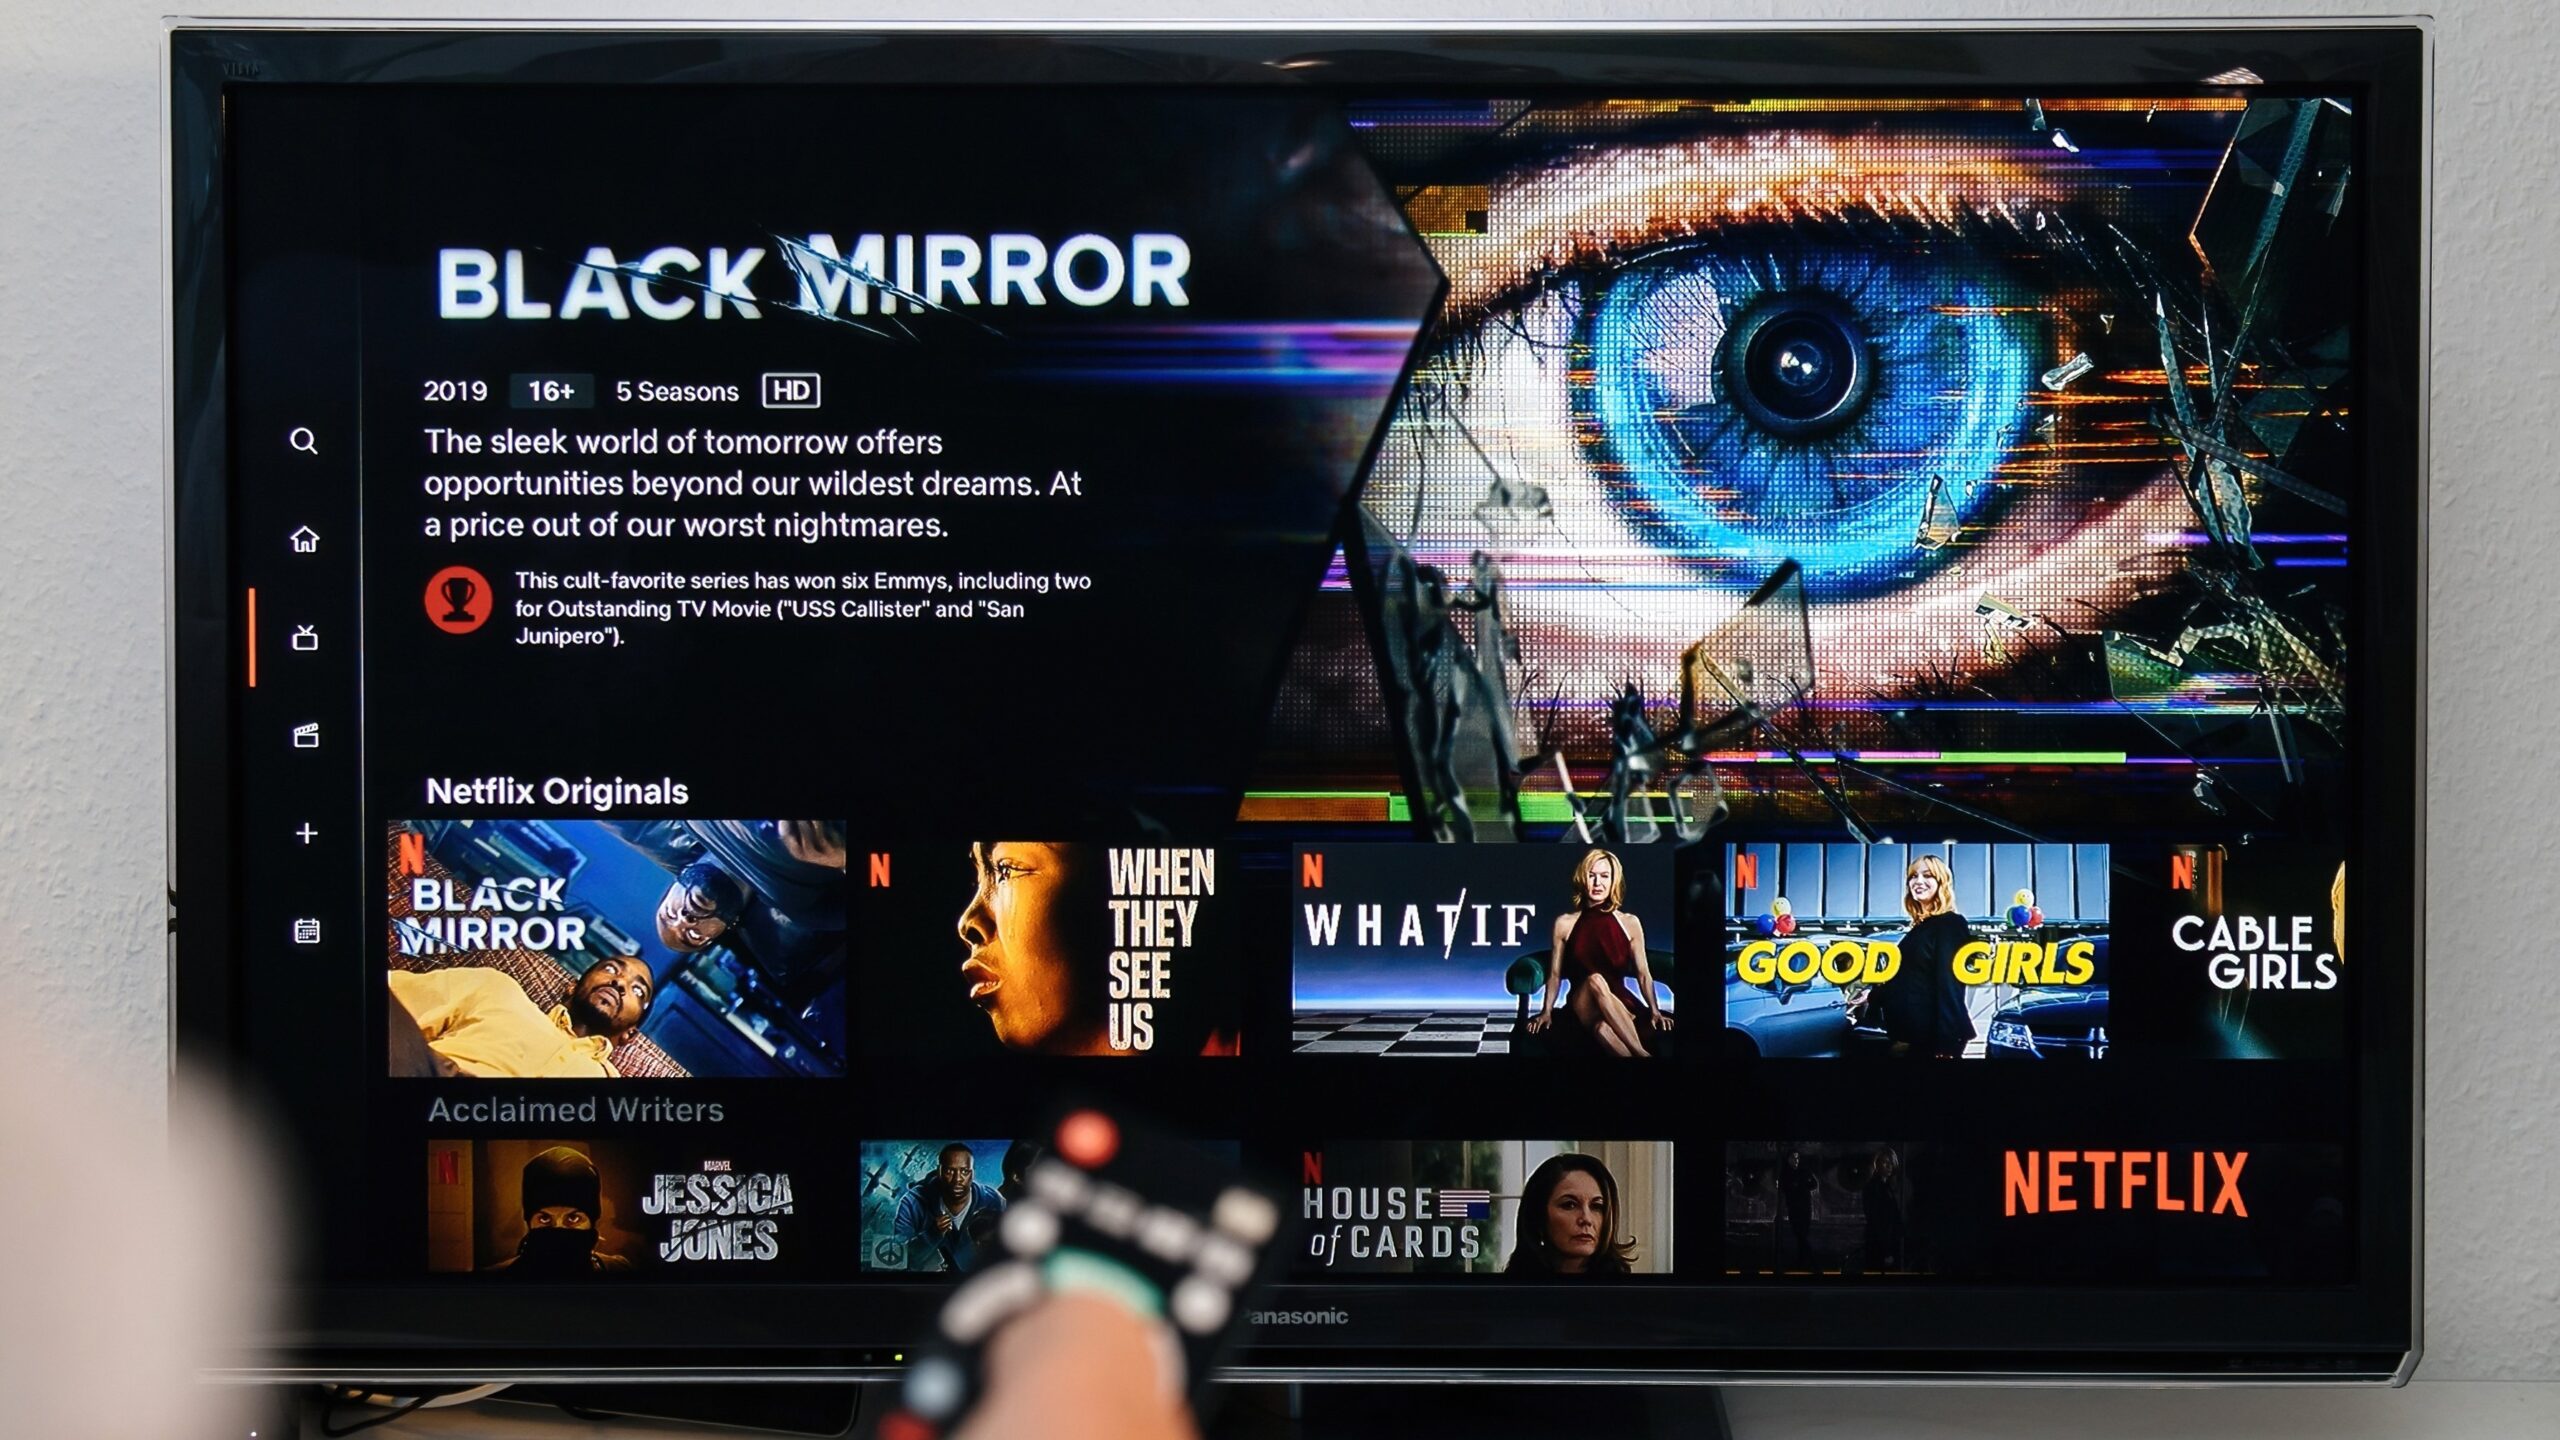 Black Mirror splash screen on Netflix